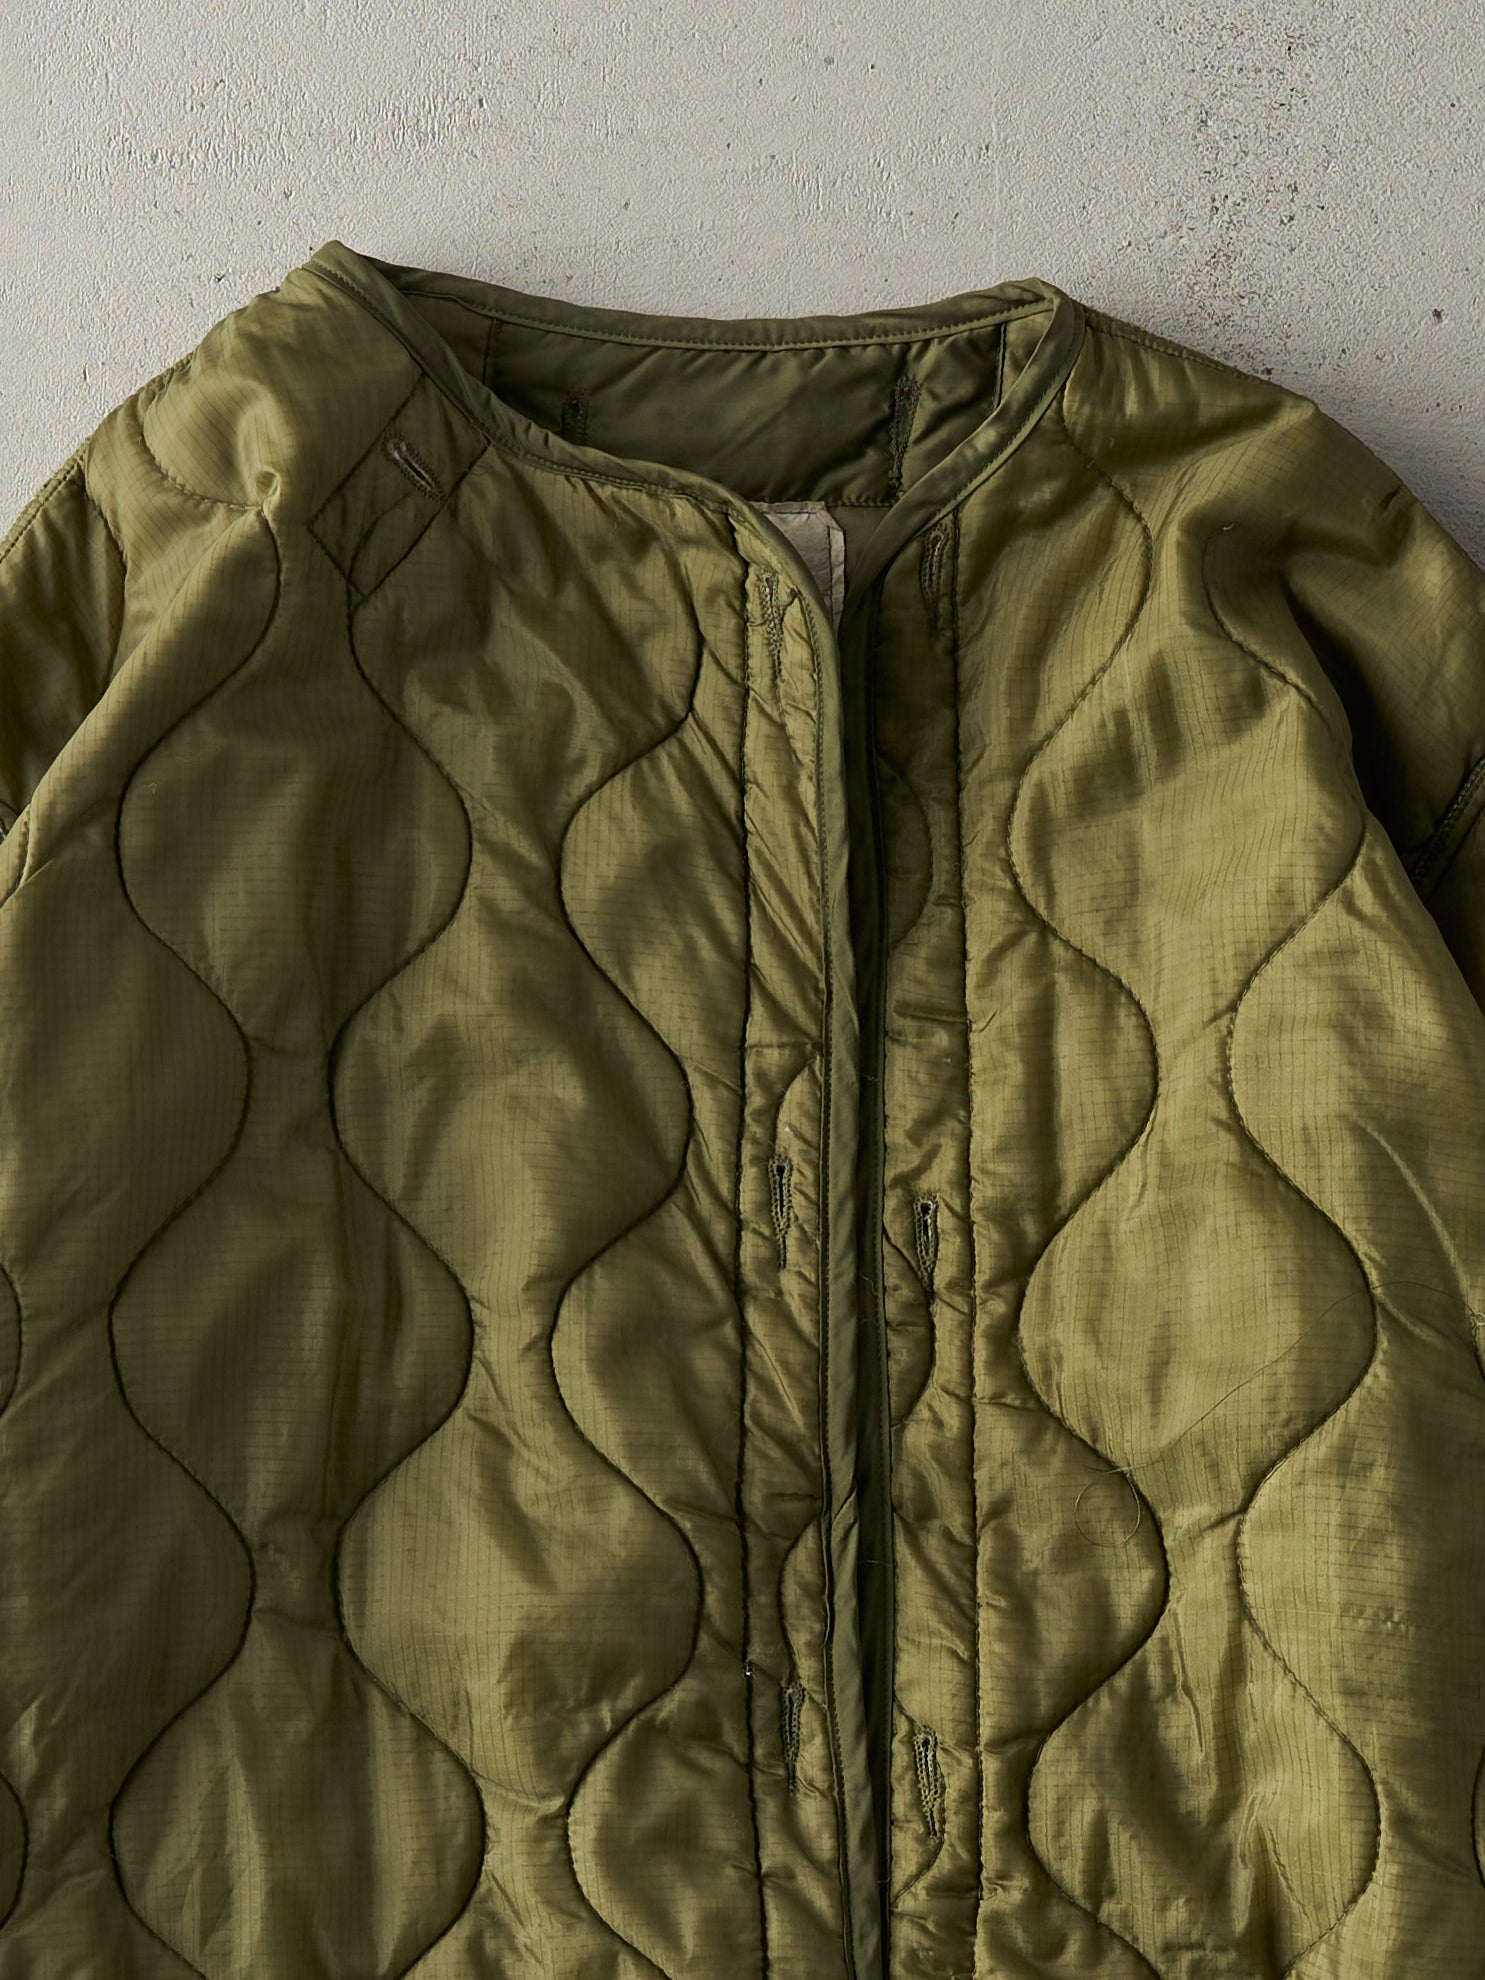 Vintage 90s Army Green Parka Liner Jacket (L/XL)